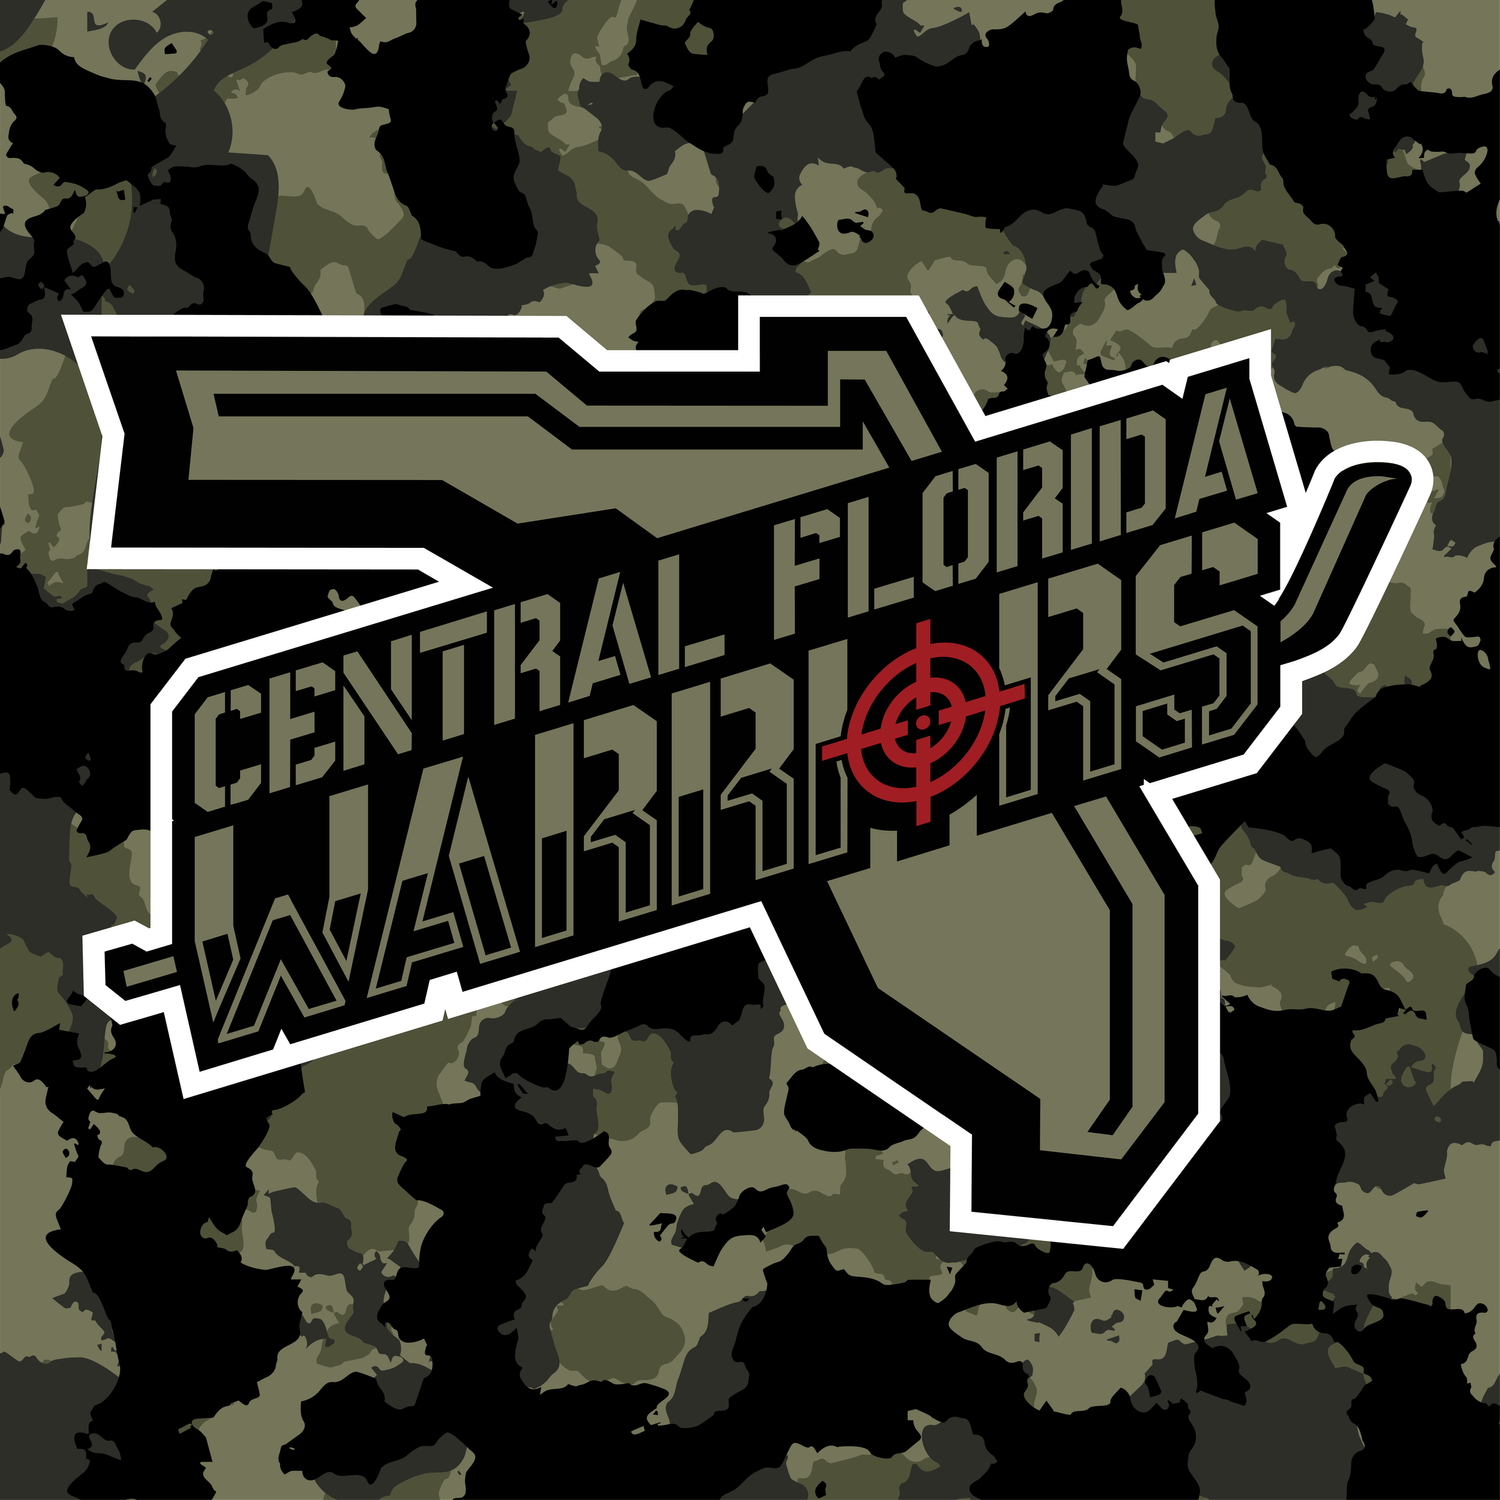 CENTRAL FLORIDA WARRIORS HOCKEY